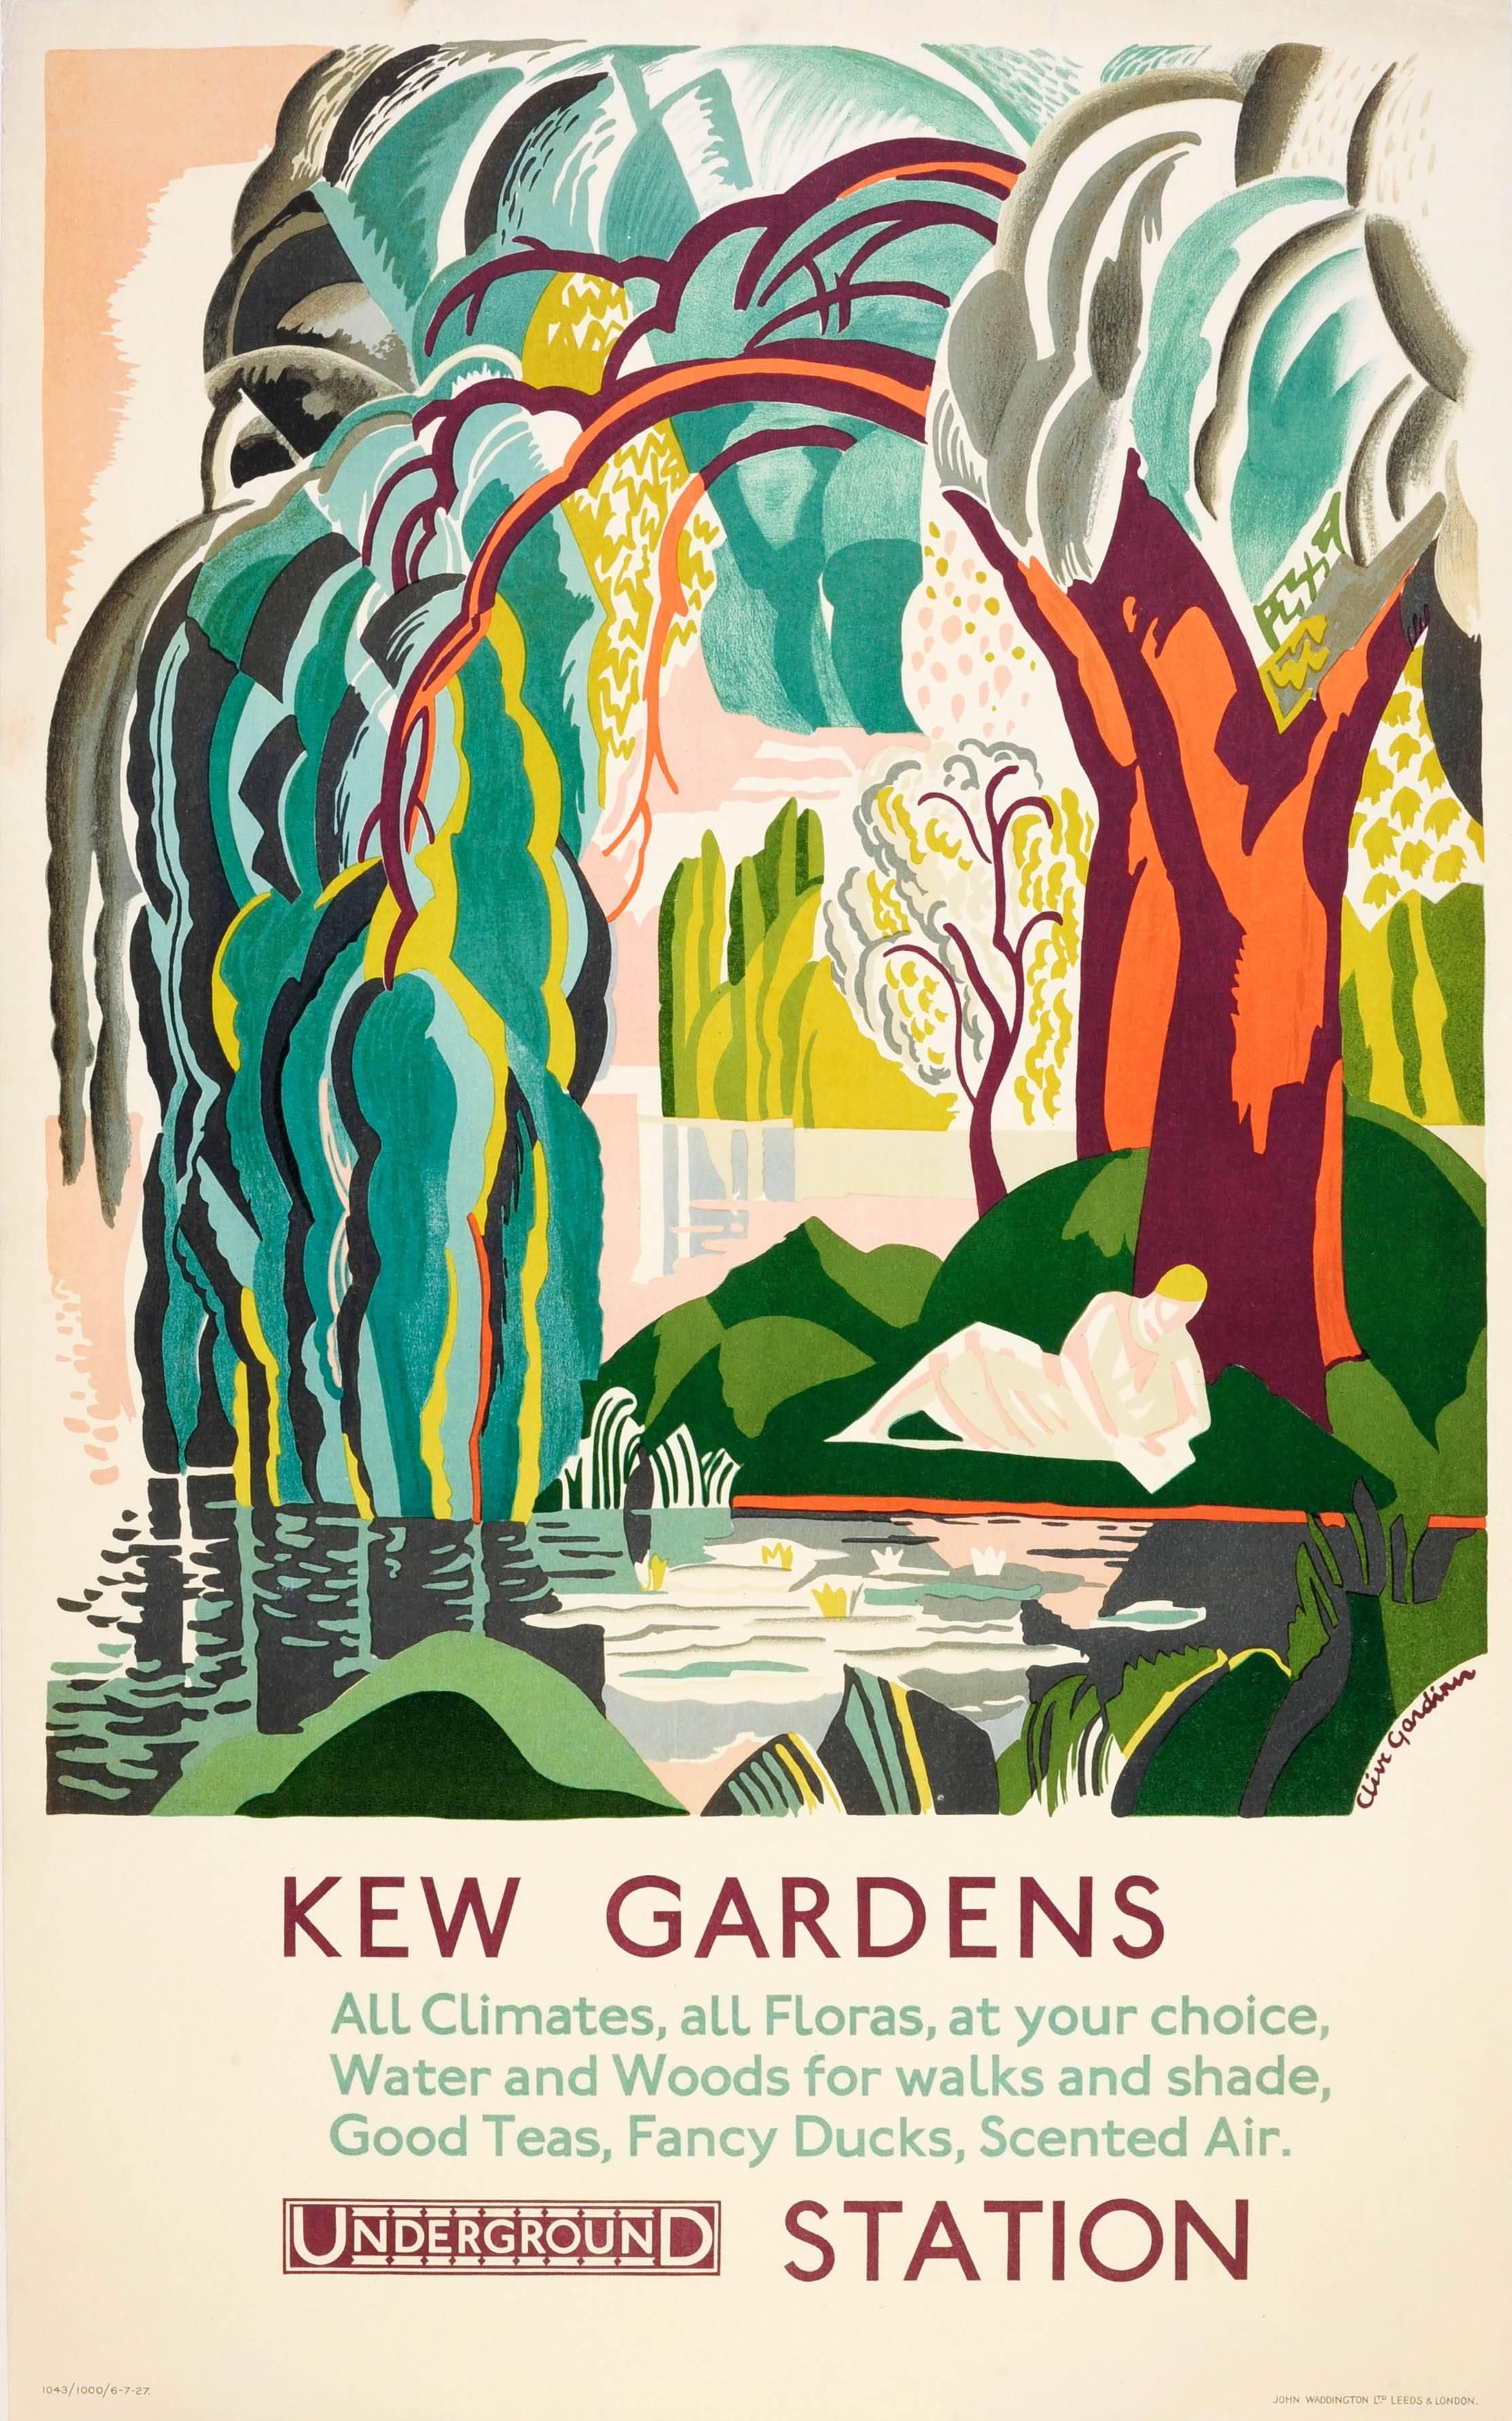 Clive Gardiner Print - Original Vintage London Transport Poster For Kew Gardens By London Underground